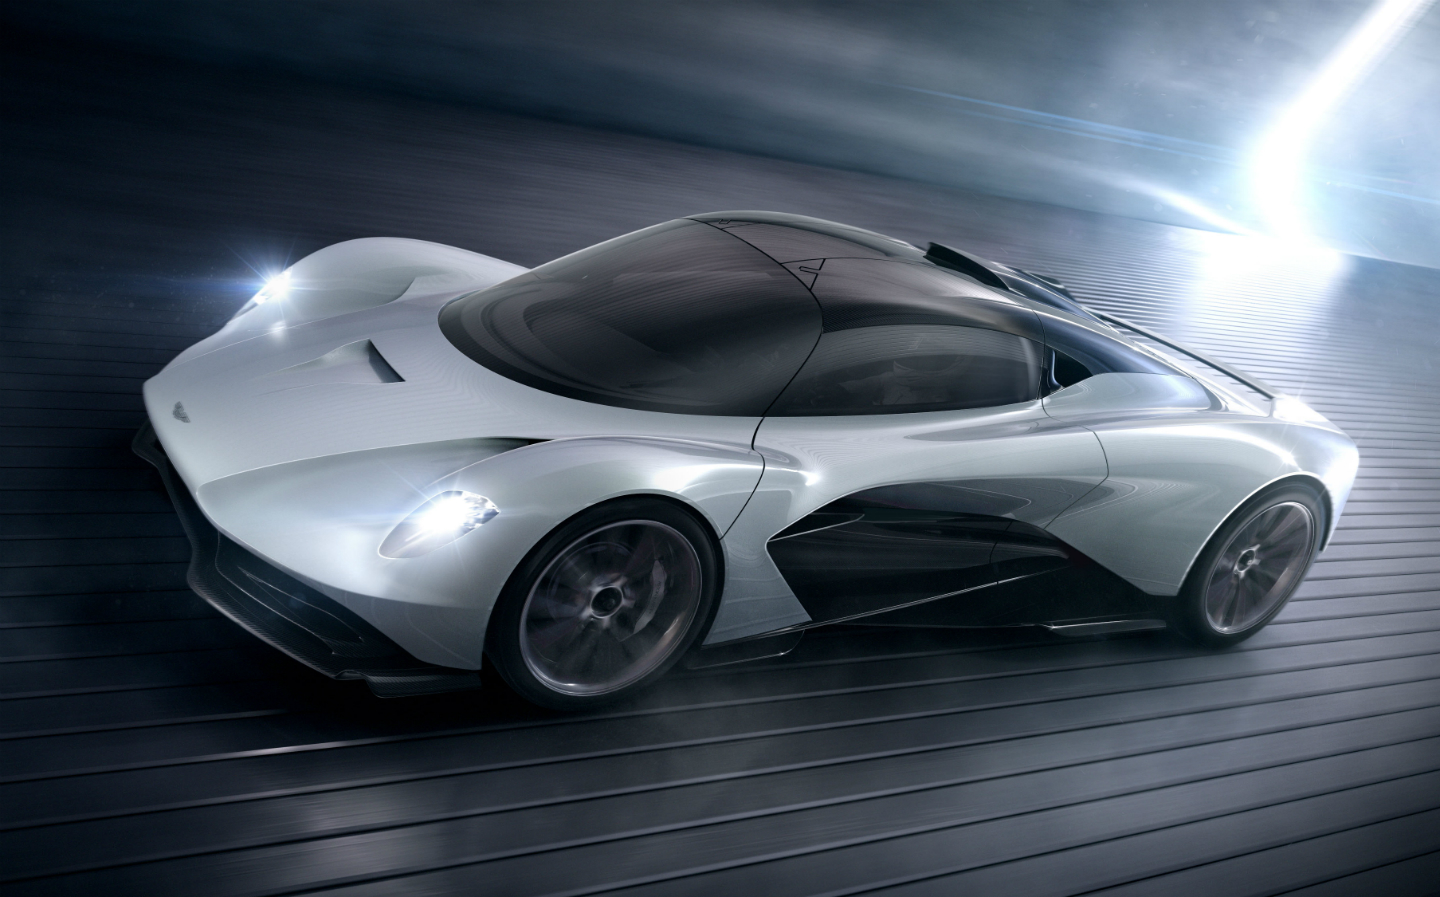 James Bond's next car will be the Aston Martin Valhalla hypercar